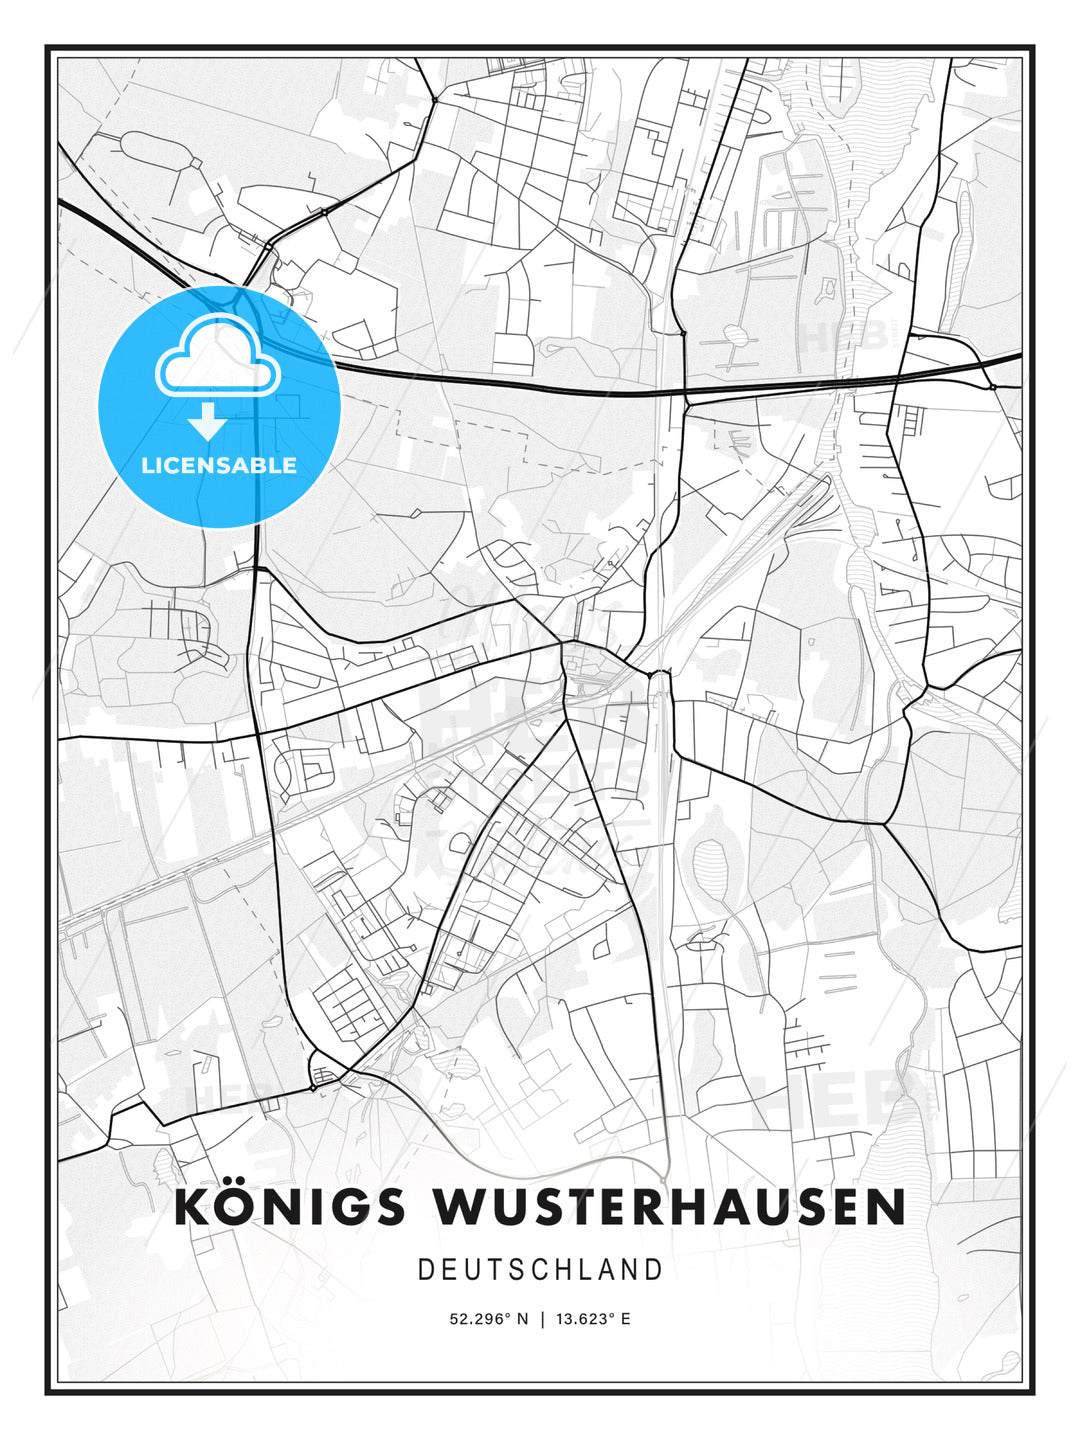 KÖNIGS WUSTERHAUSEN / Konigs Wusterhausen, Germany, Modern Print Template in Various Formats - HEBSTREITS Sketches